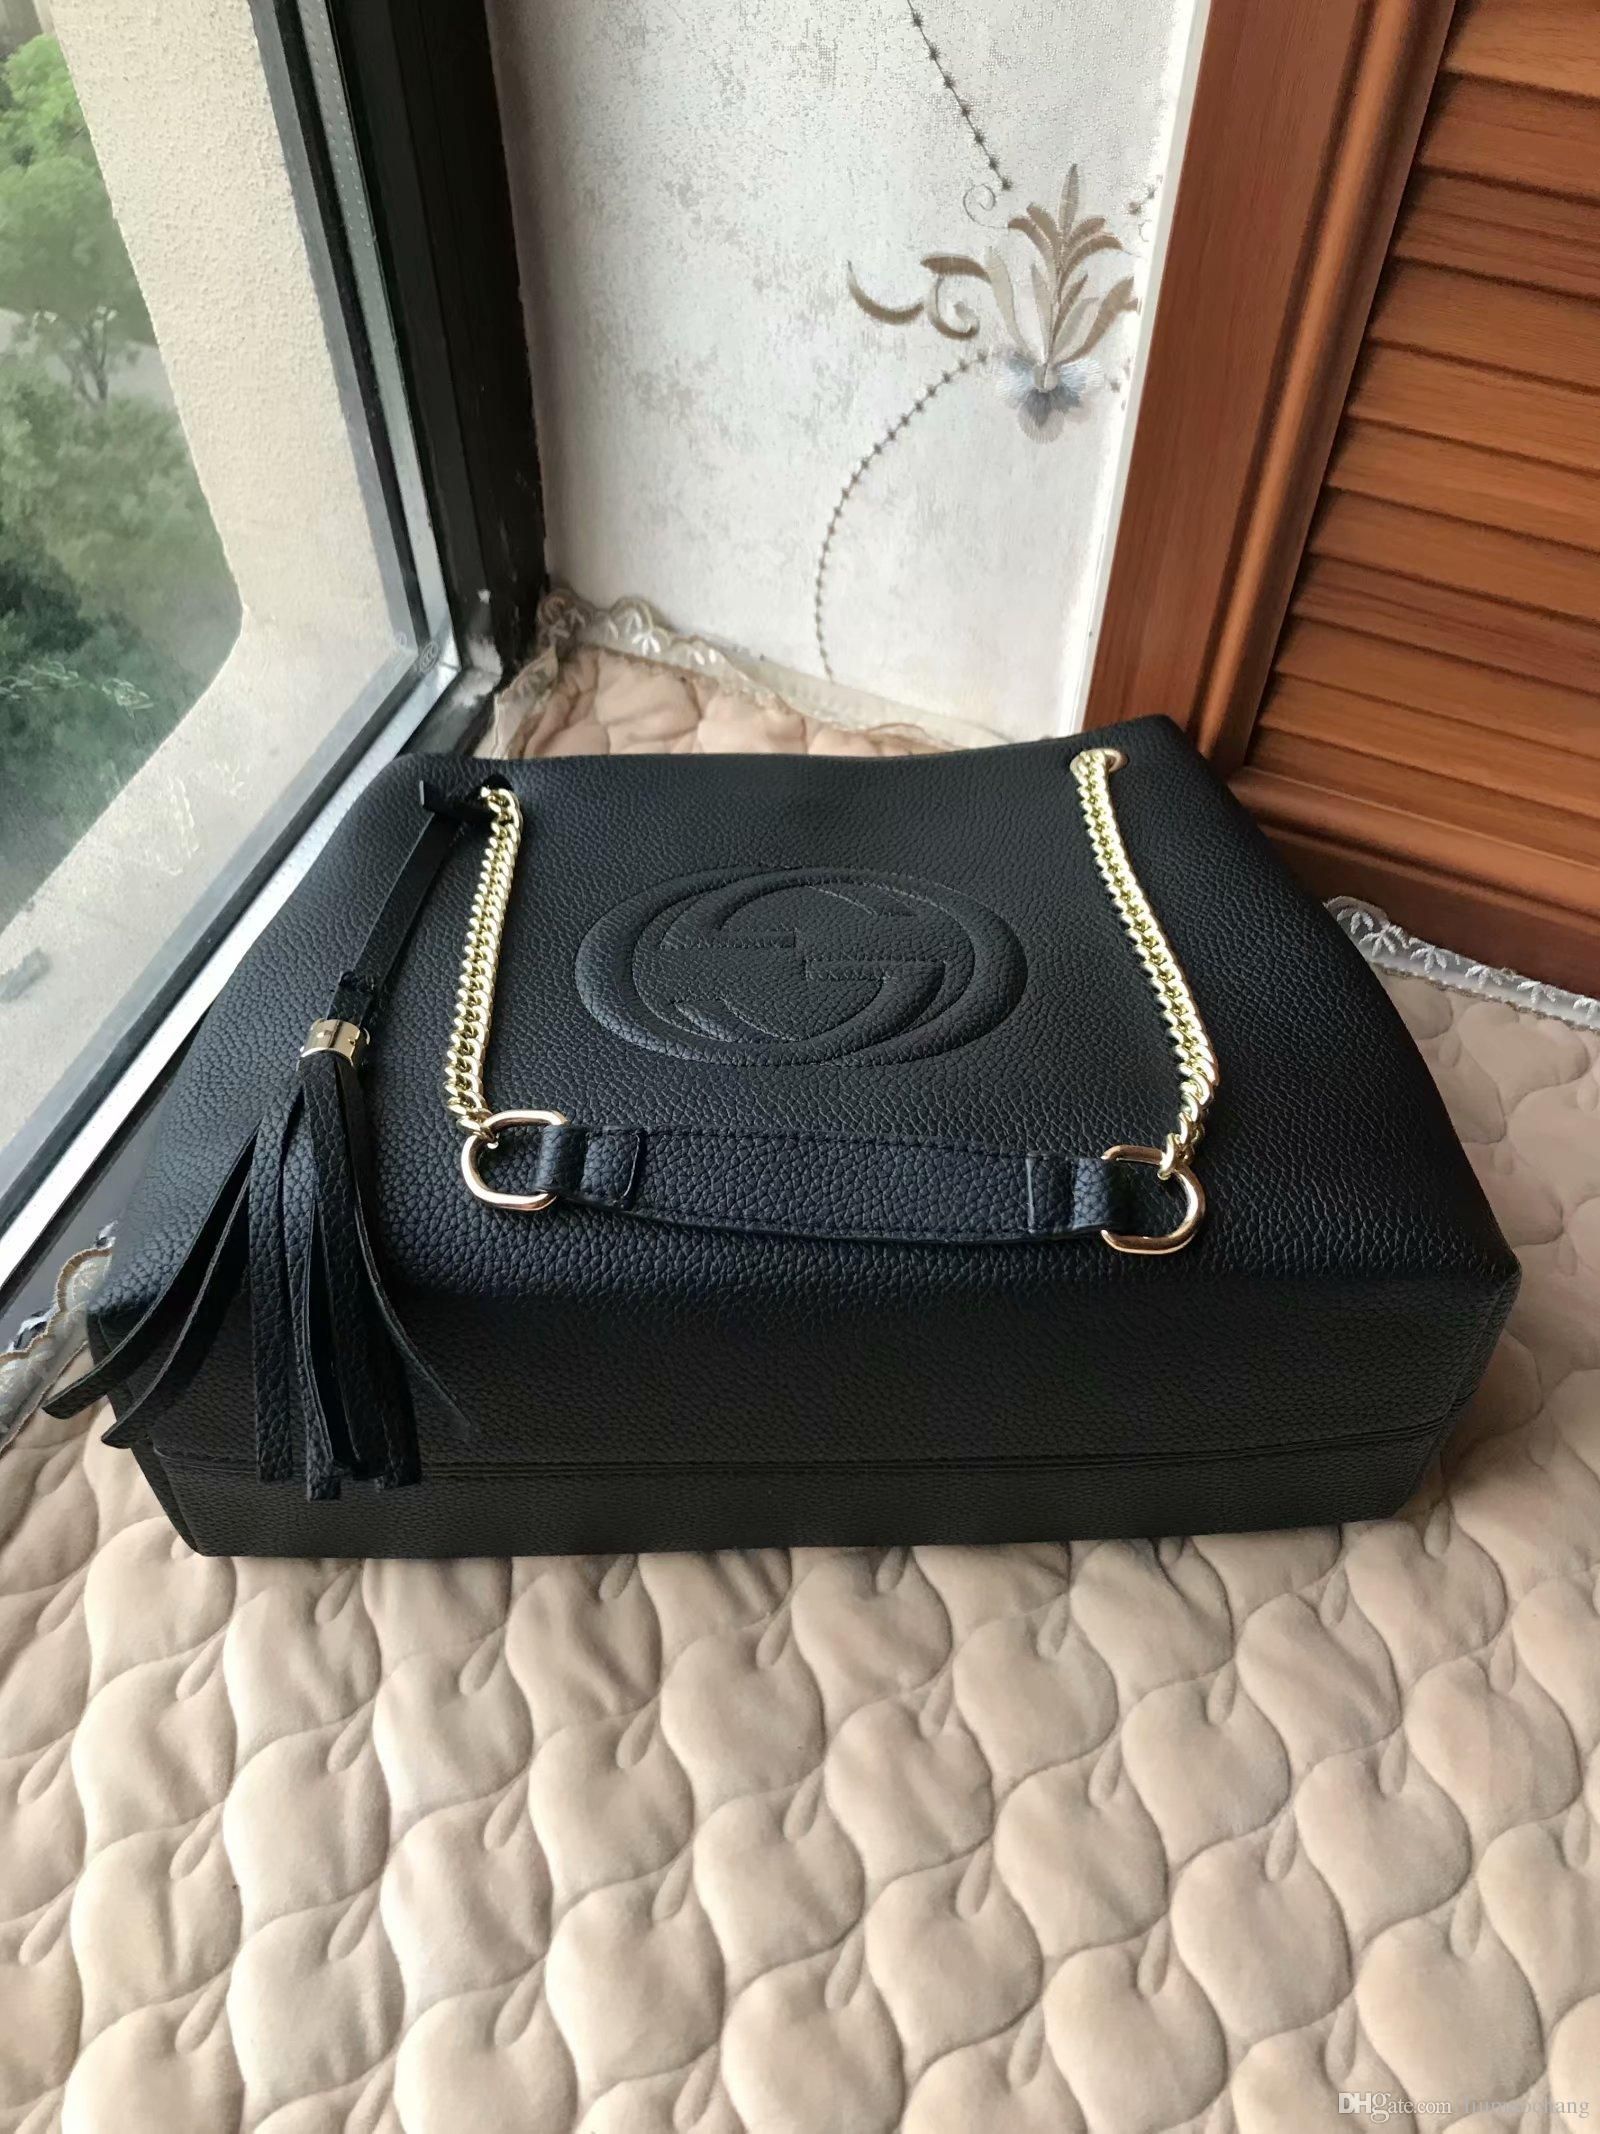 DesignerGucciBig Size Chain Shoulder Bag With Large Tassel  Portable Composite Bag Slung Leather Portable Shopping Bag From  Huangtong020, $ 